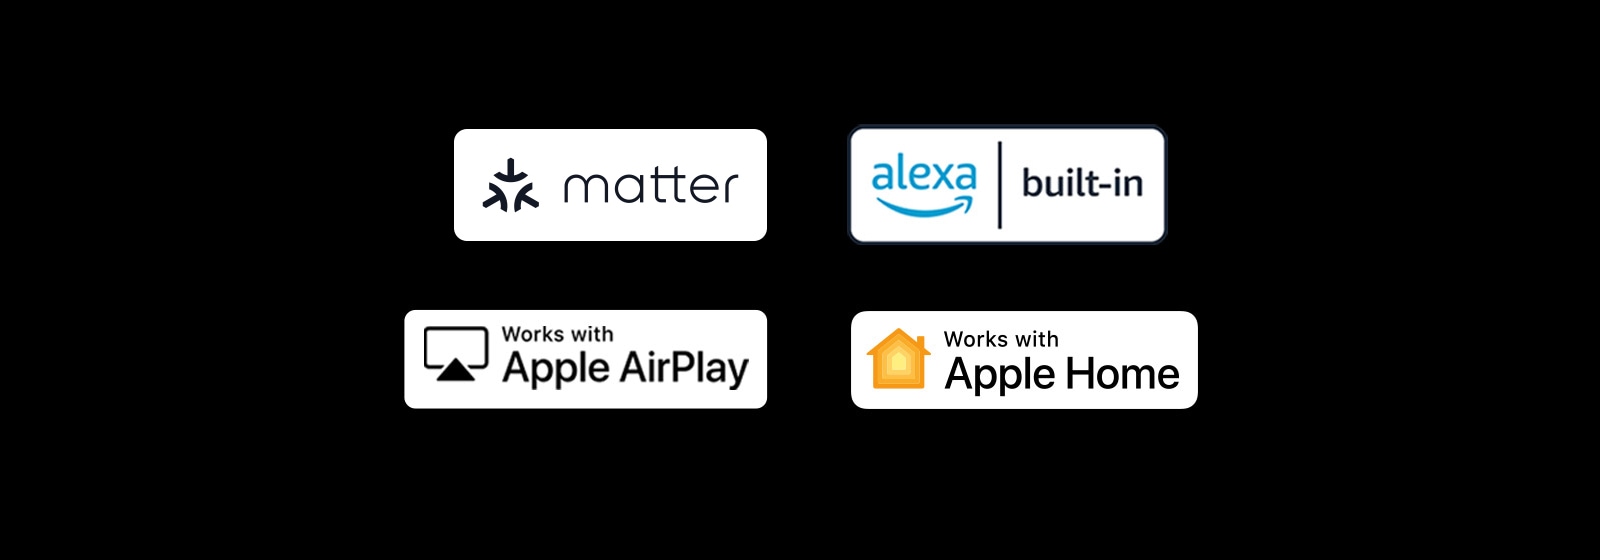 Logo Alexa intégré Logo Works with Apple AirPlay Logo Works with Apple Home Logo Works with Matter